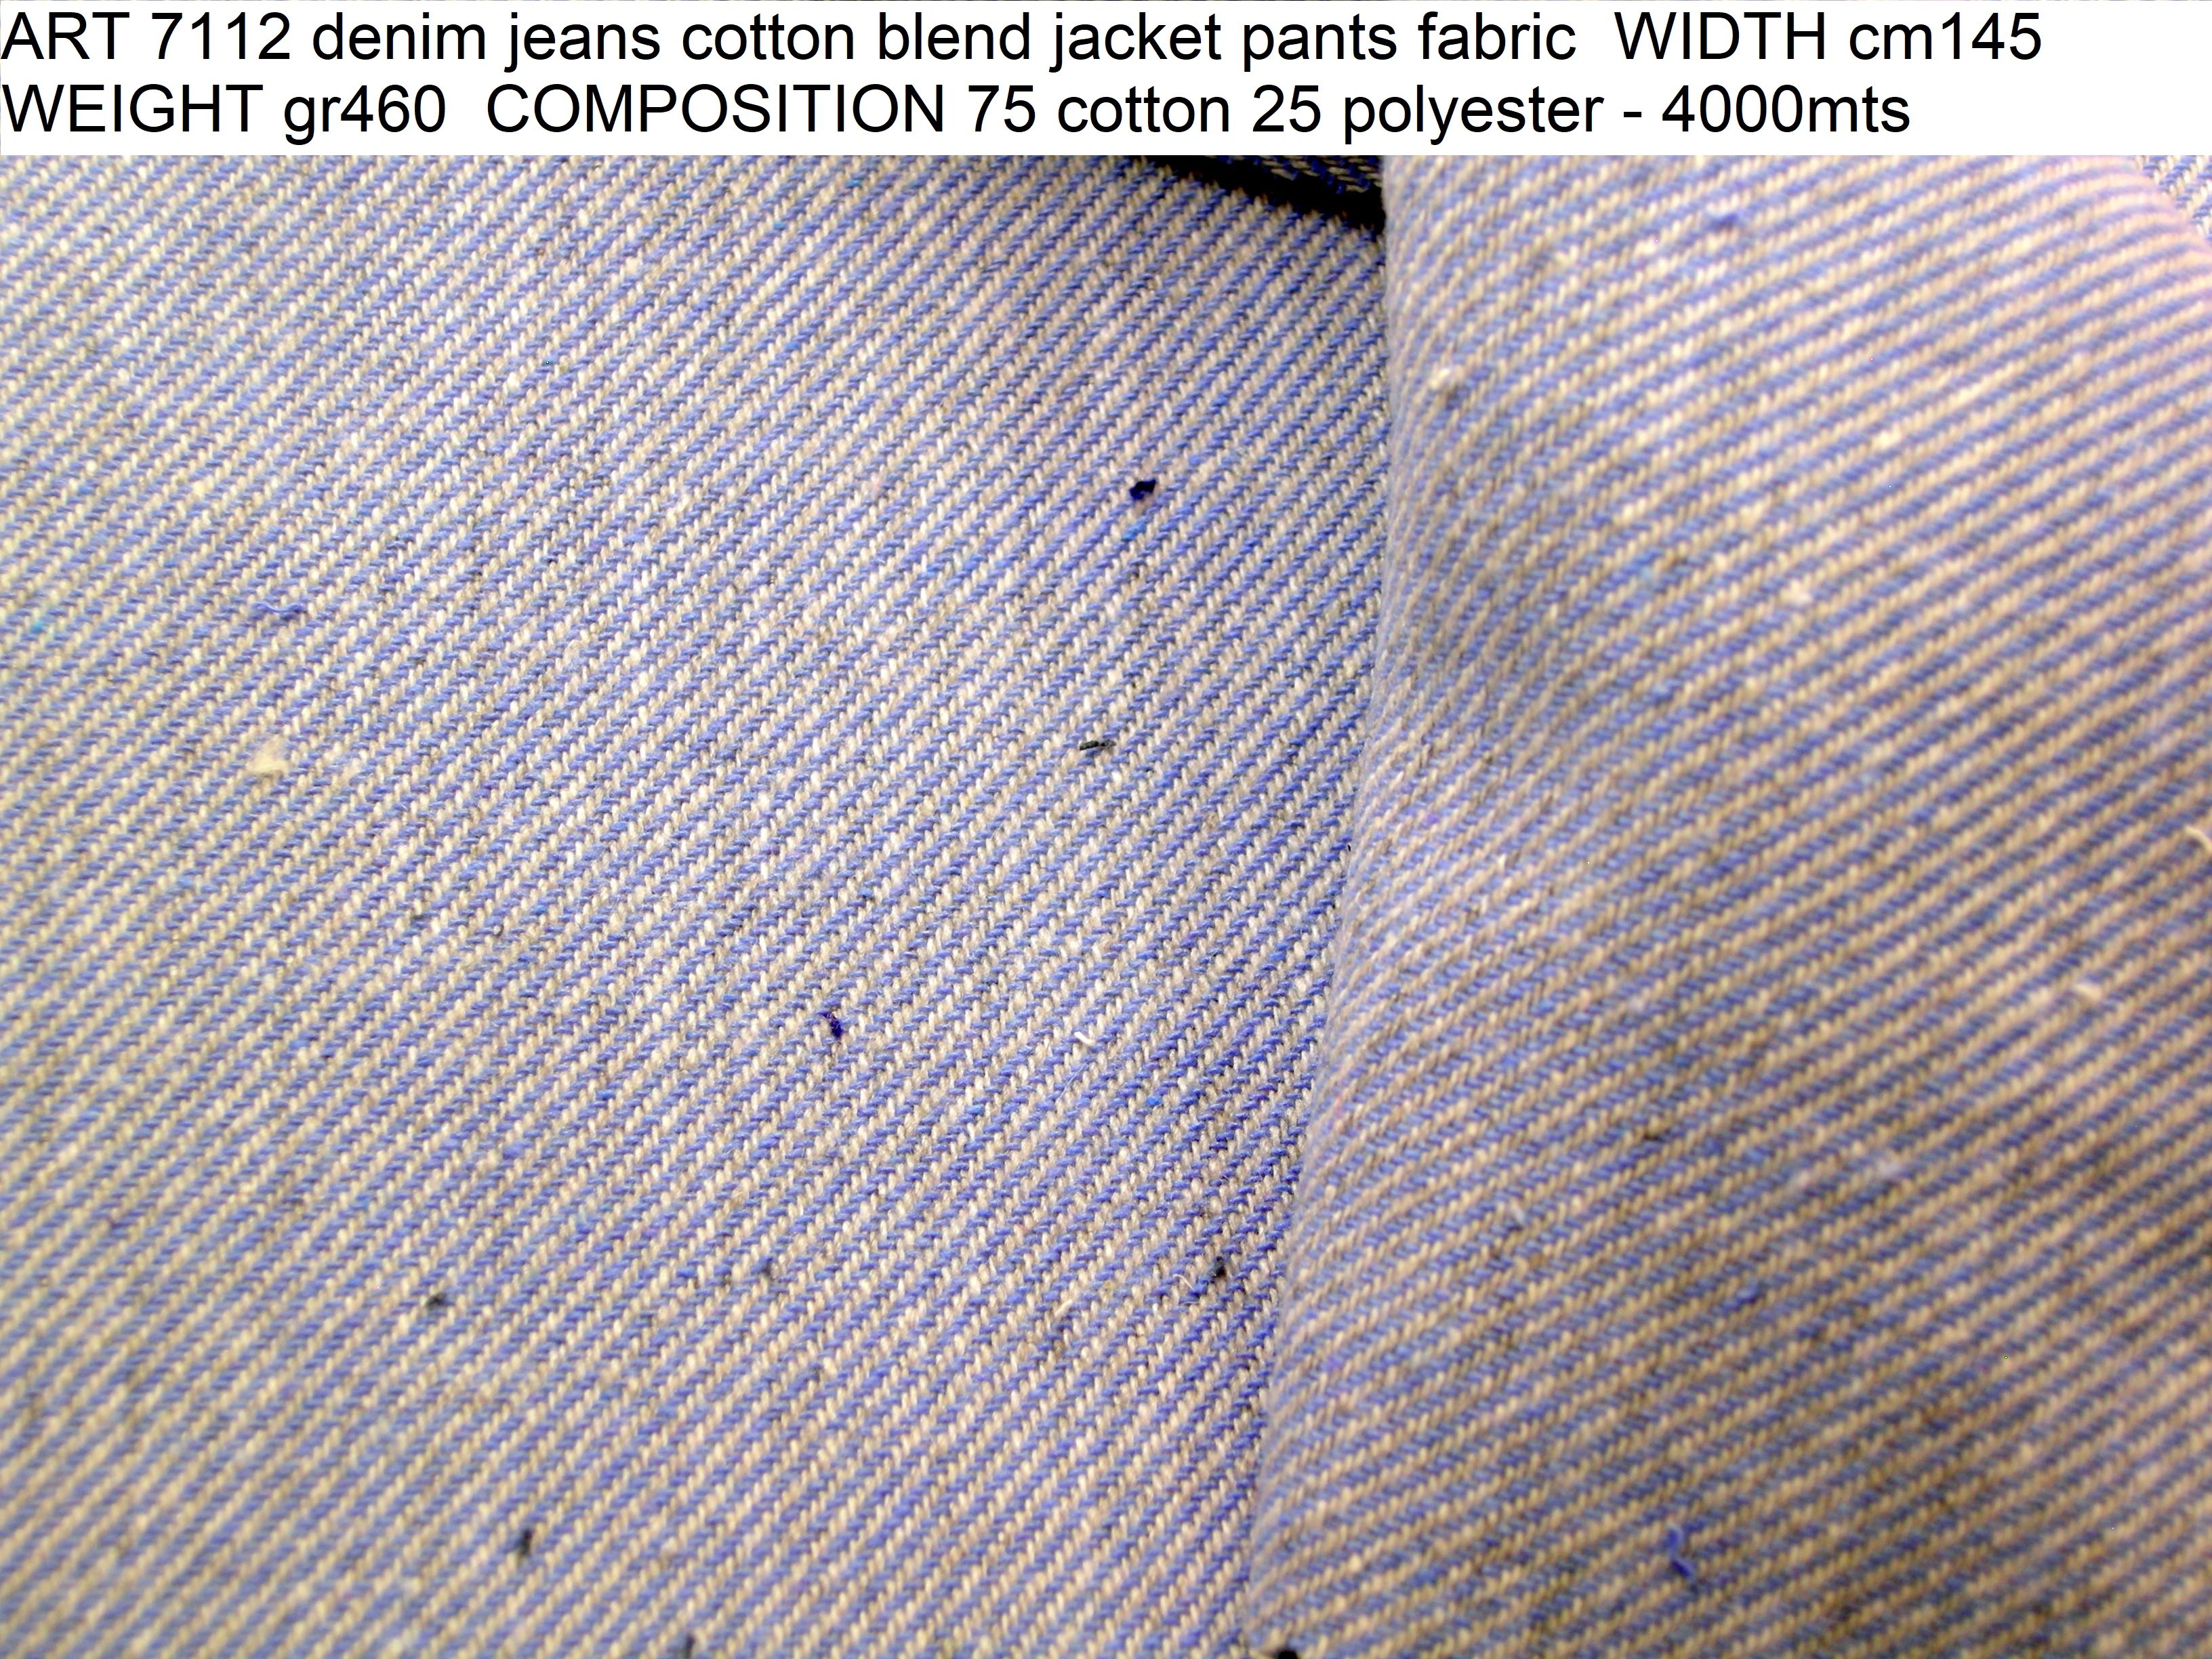 ART 7112 denim jeans cotton blend jacket pants fabric WIDTH cm145 WEIGHT gr460 COMPOSITION 75 cotton 25 polyester - 4000mts